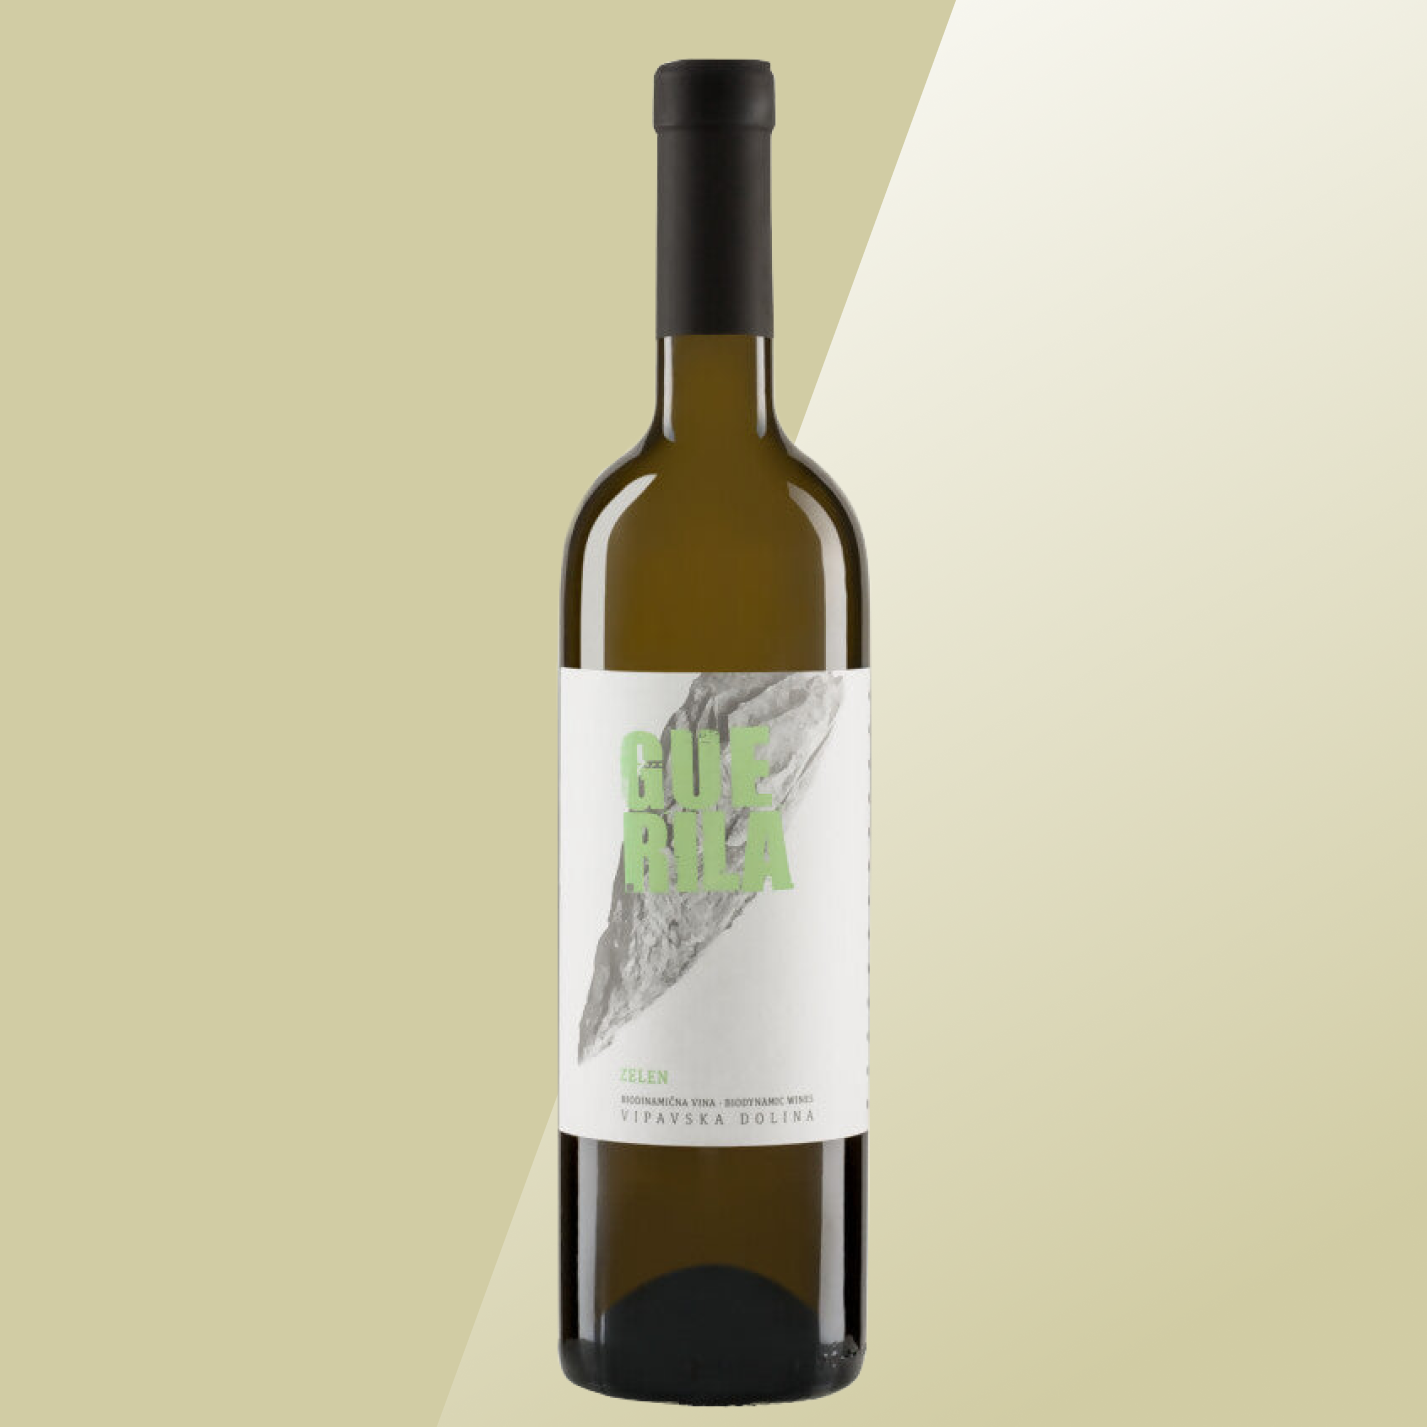 Guerila Wines - Zelen Classic Vipavska Dolina ZGP 2020